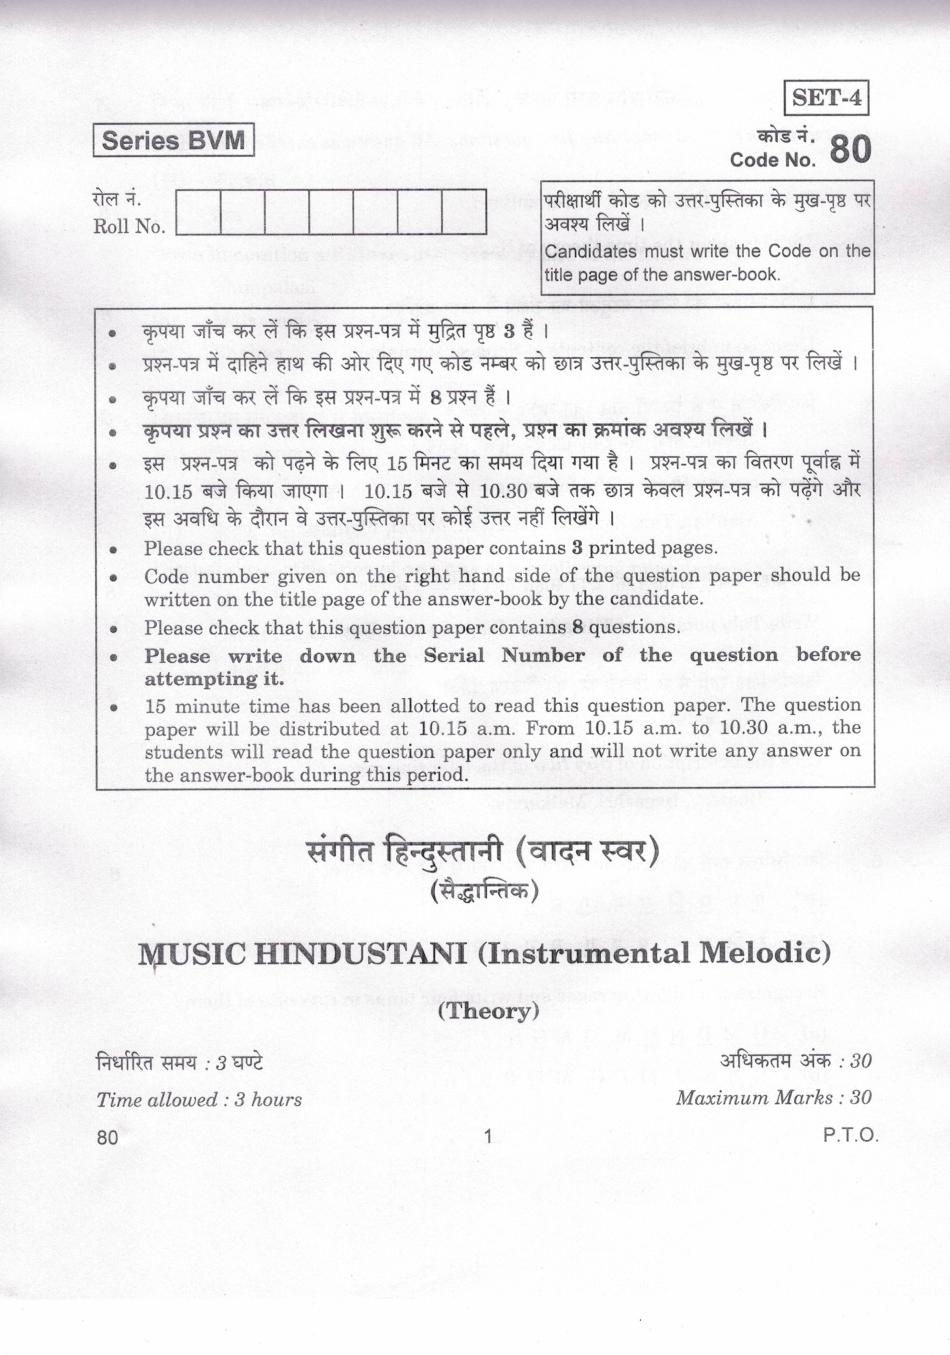 CBSE Class 12 Music Hindustani (Instrumental Melodic) Question Paper 2019